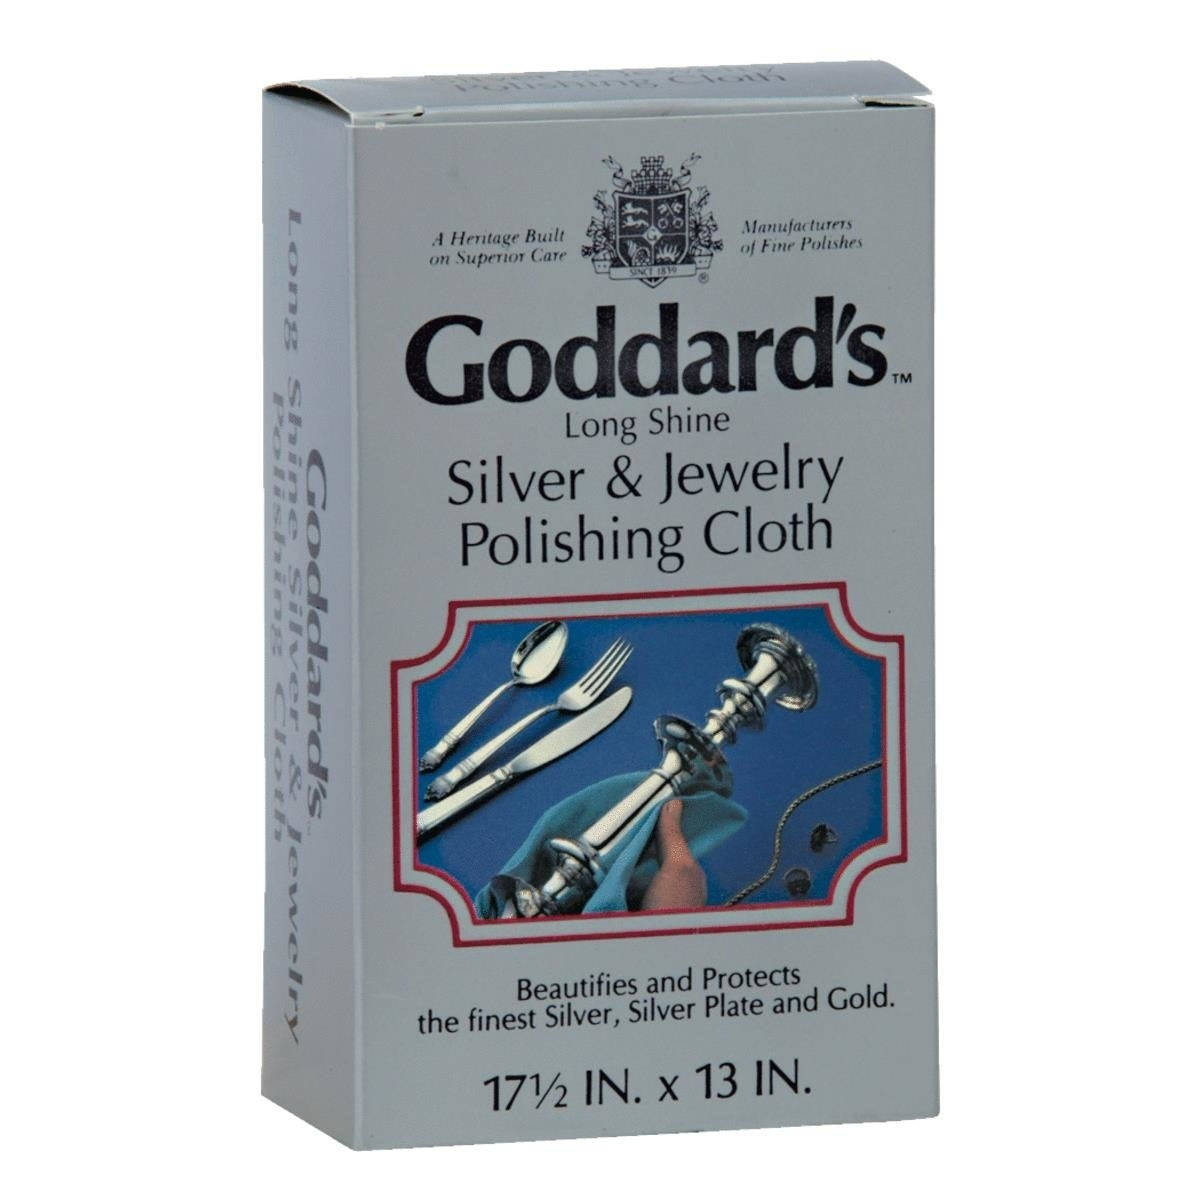 Silver Polish - Goddard's